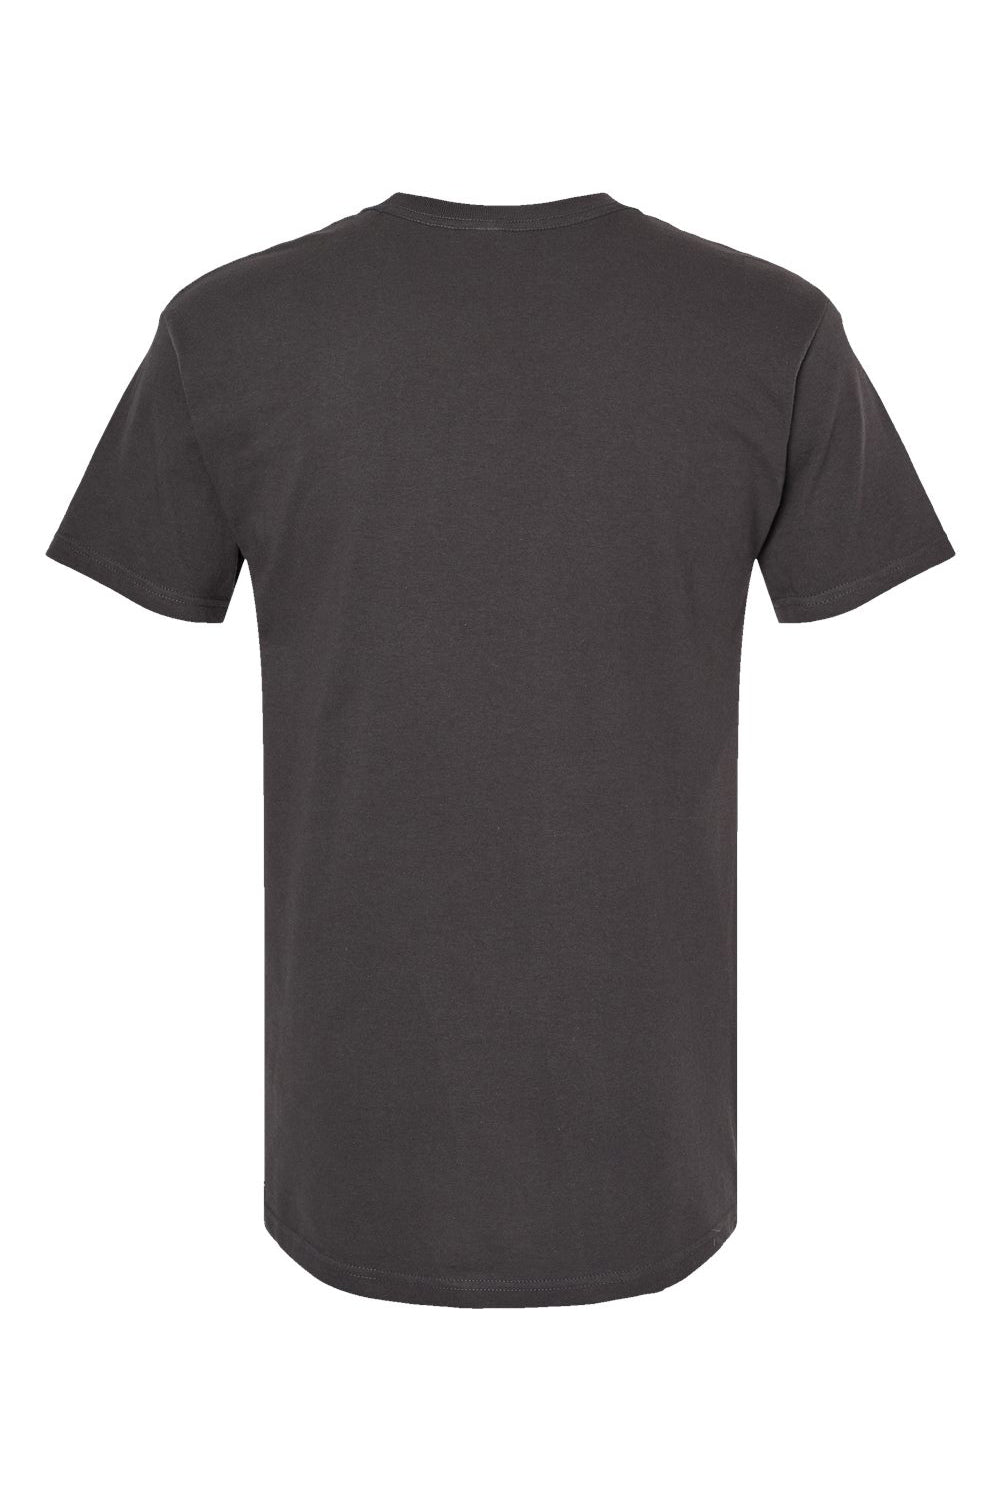 M&O 4800 Mens Gold Soft Touch Short Sleeve Crewneck T-Shirt Charcoal Grey Flat Back